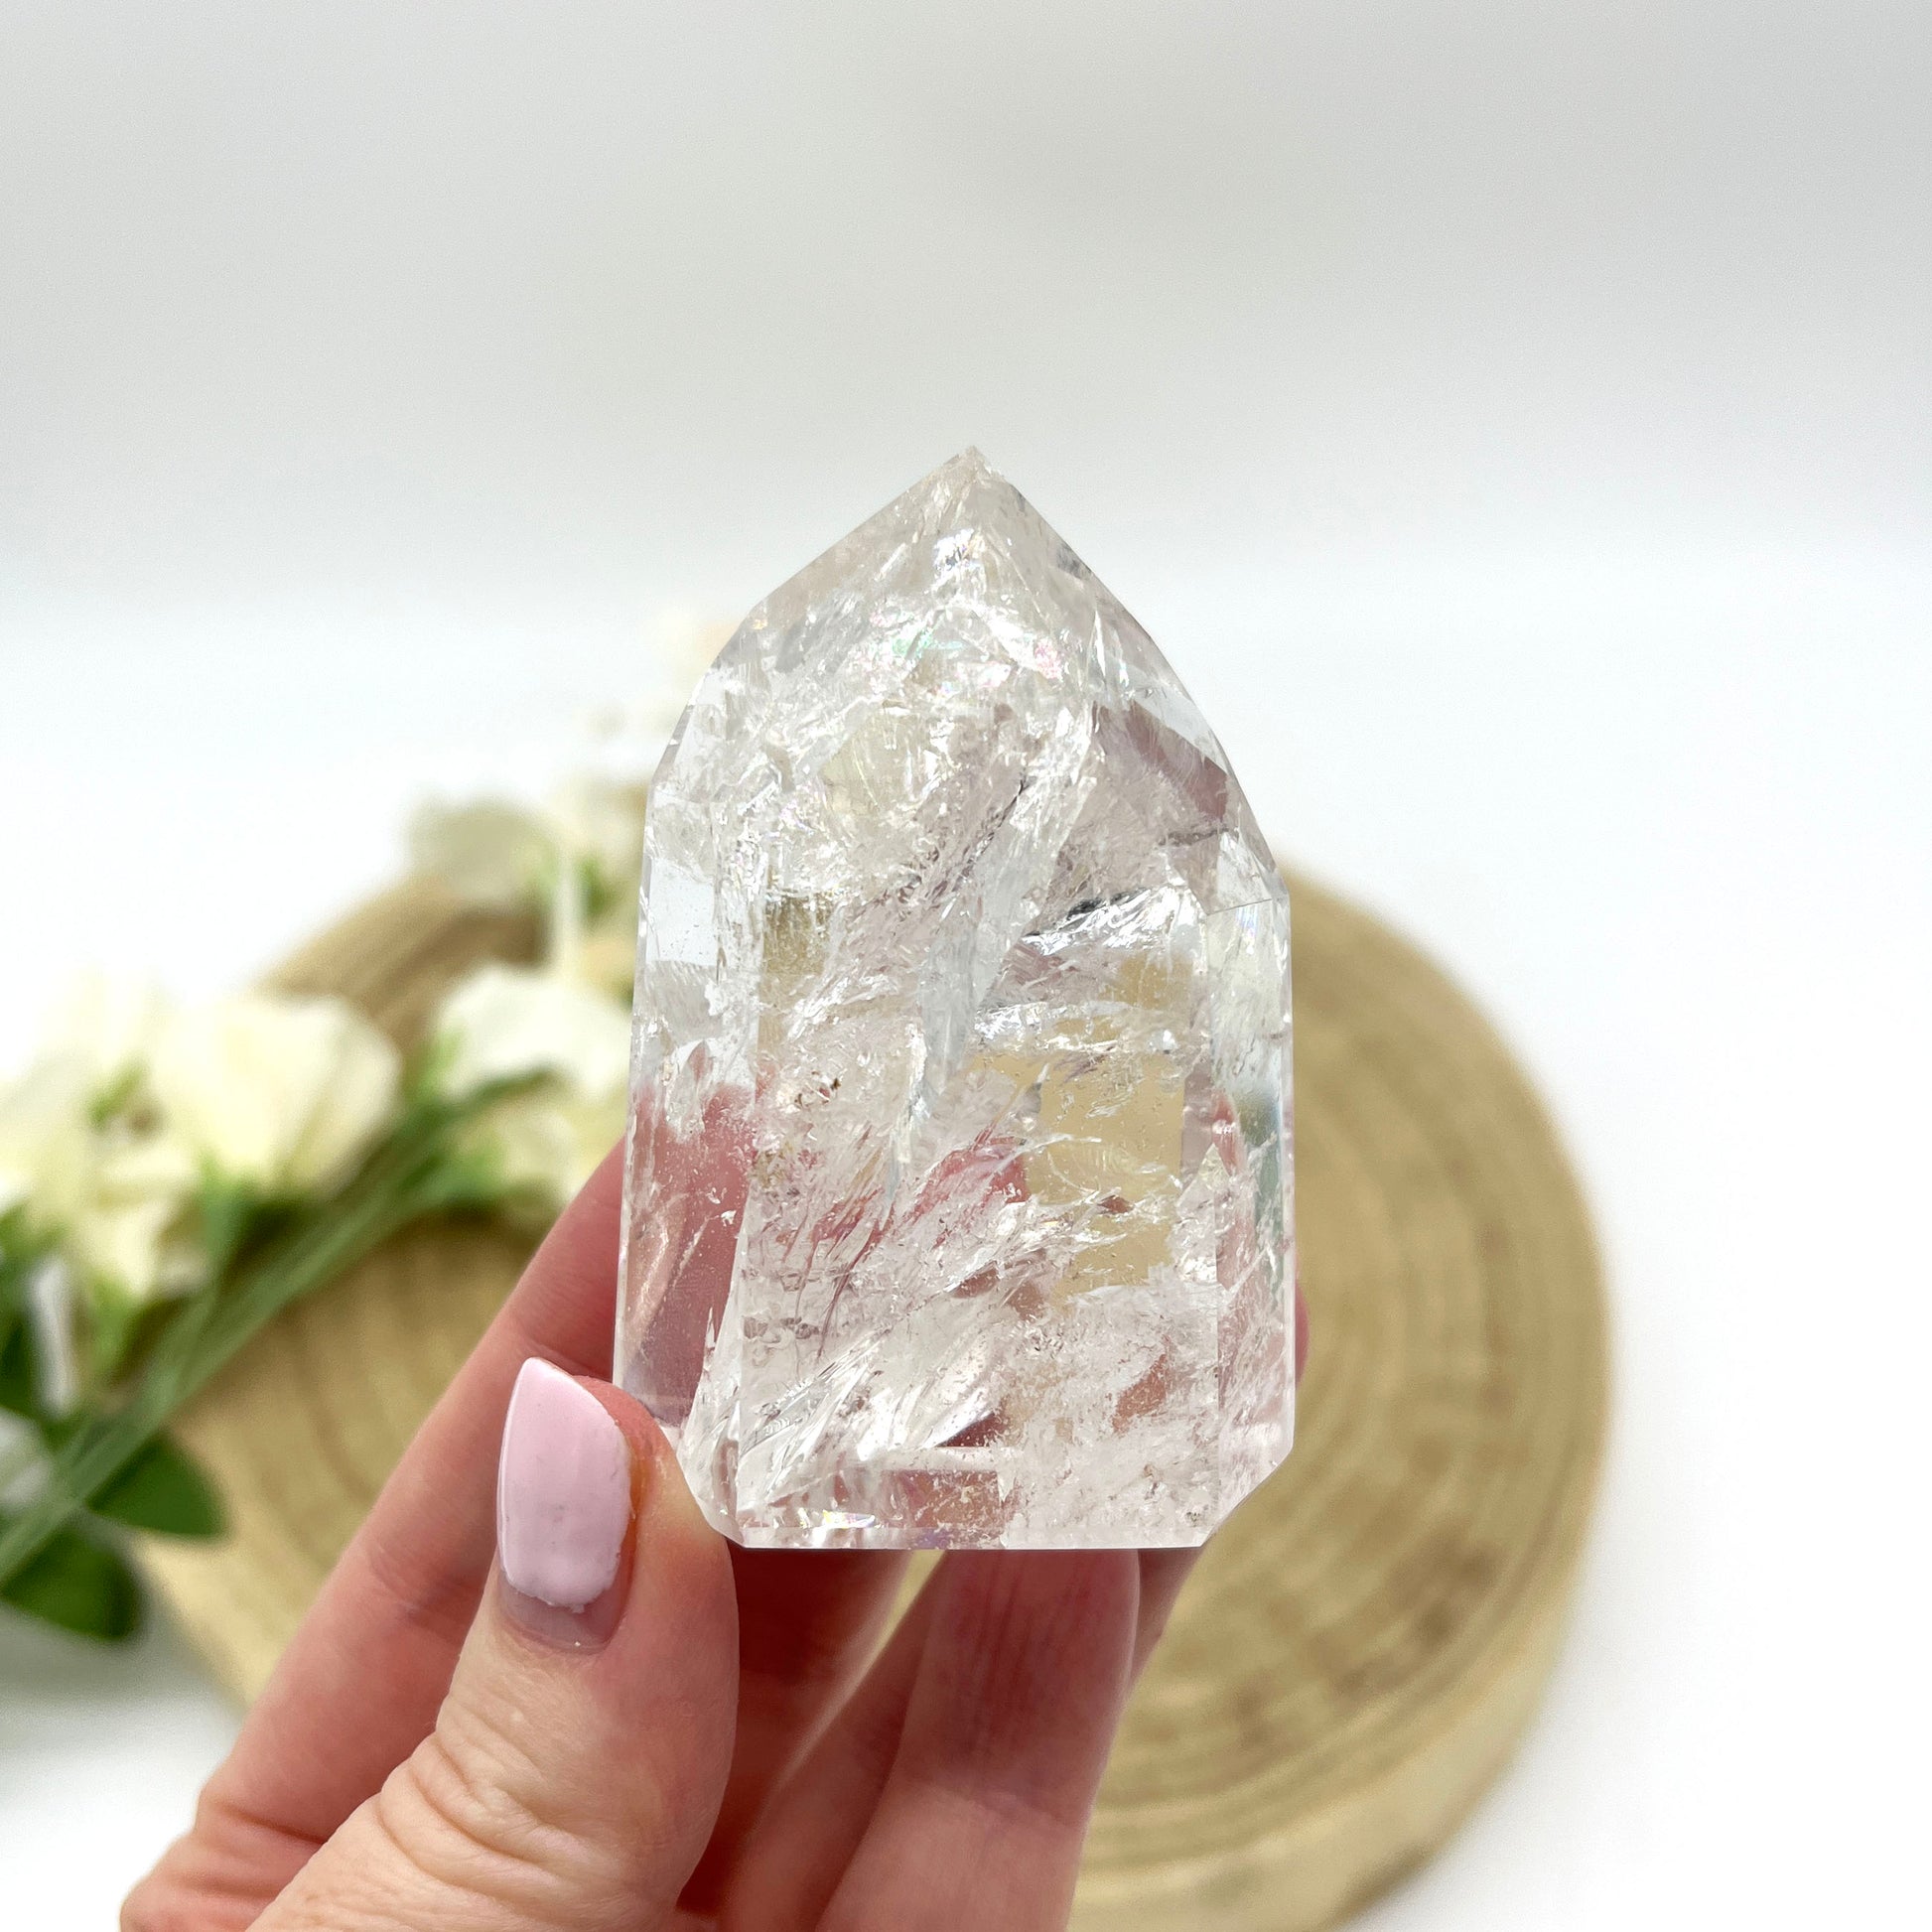 Polished high grade clear quartz crystal generator Australia